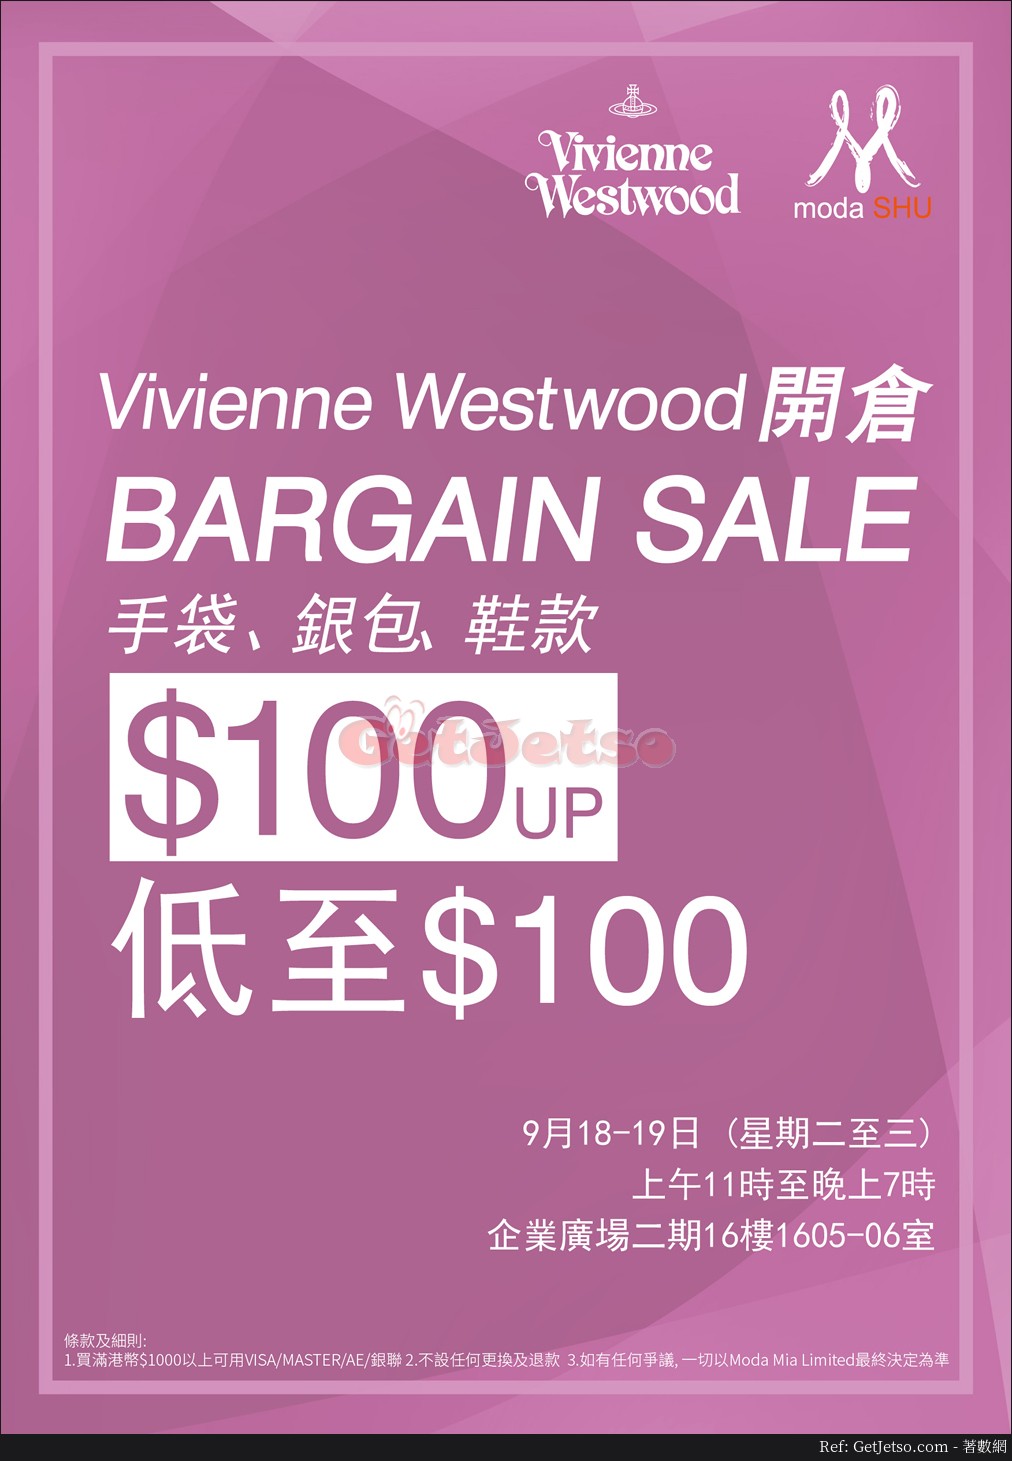 Vivienne Westwood 低至0開倉優惠@九龍灣企業廣場(18年9月18-19日)圖片1